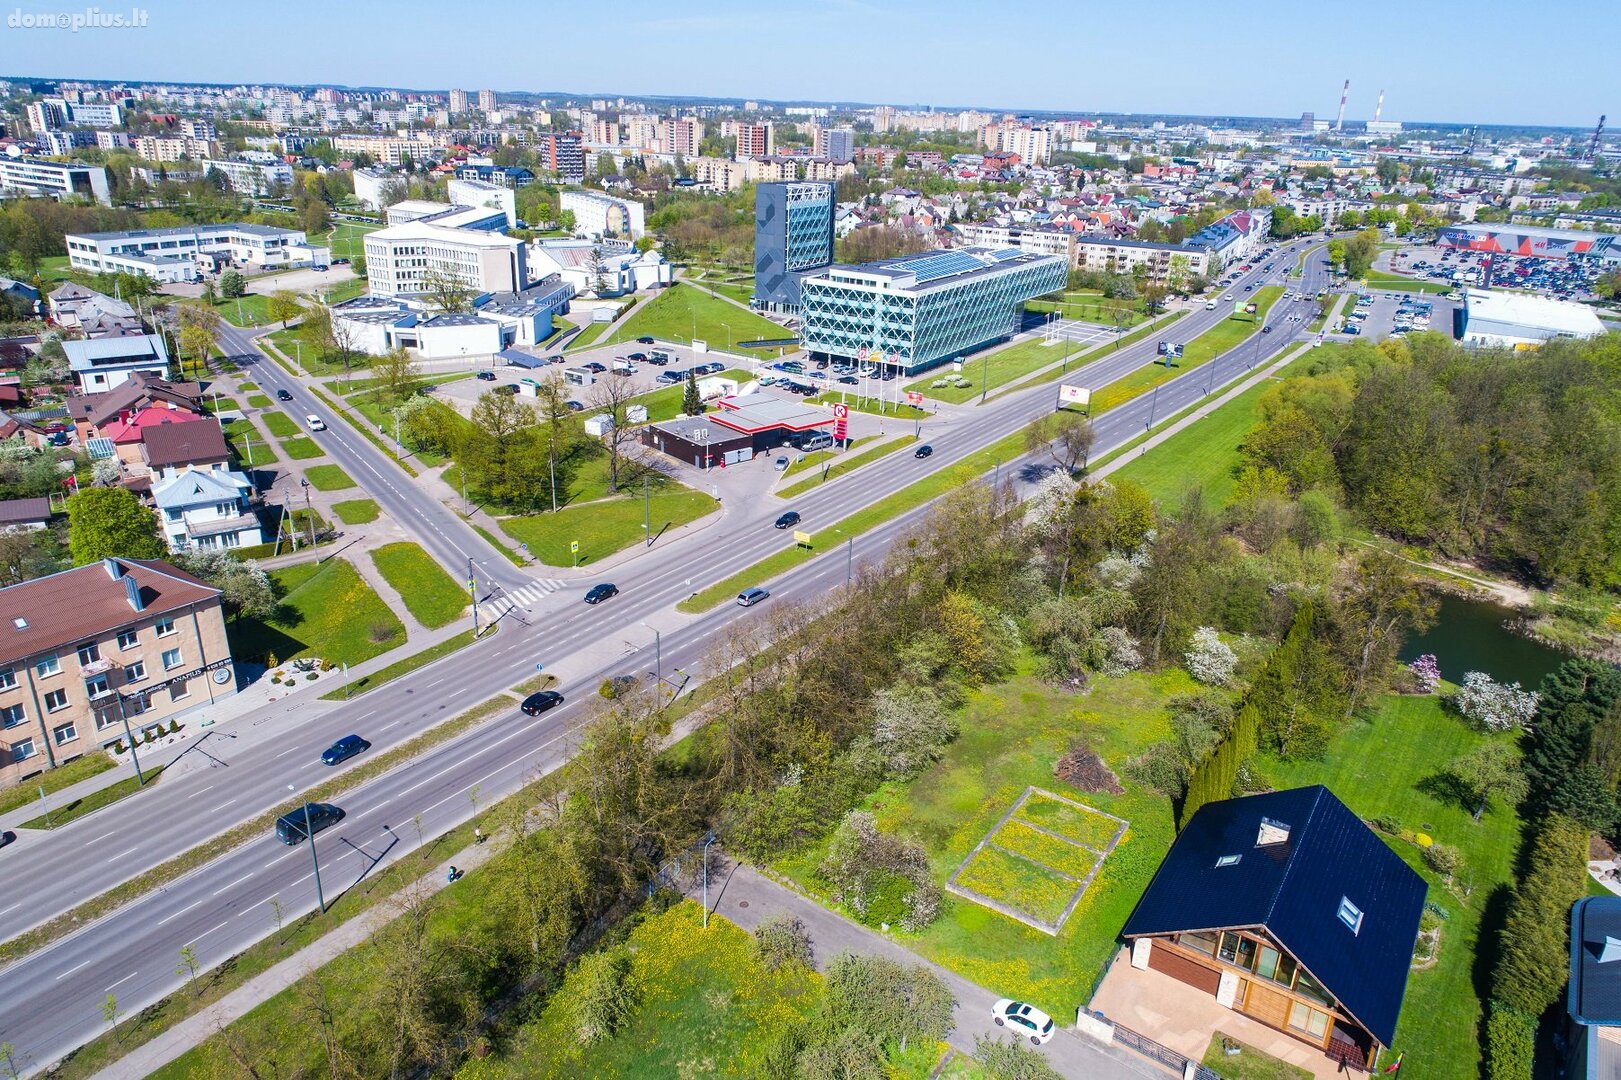 Land for sale Kaune, Dainavoje